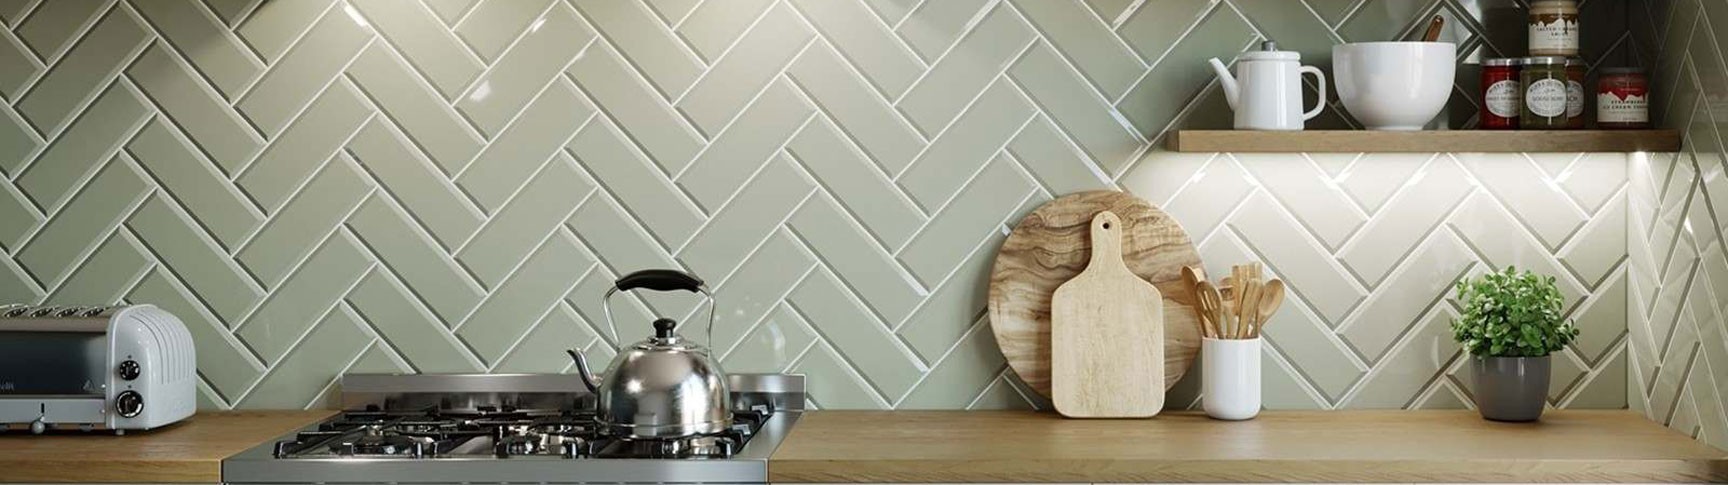 Kitchen Wall Tiles | World of Tiles, Bathrooms & Wood Flooring